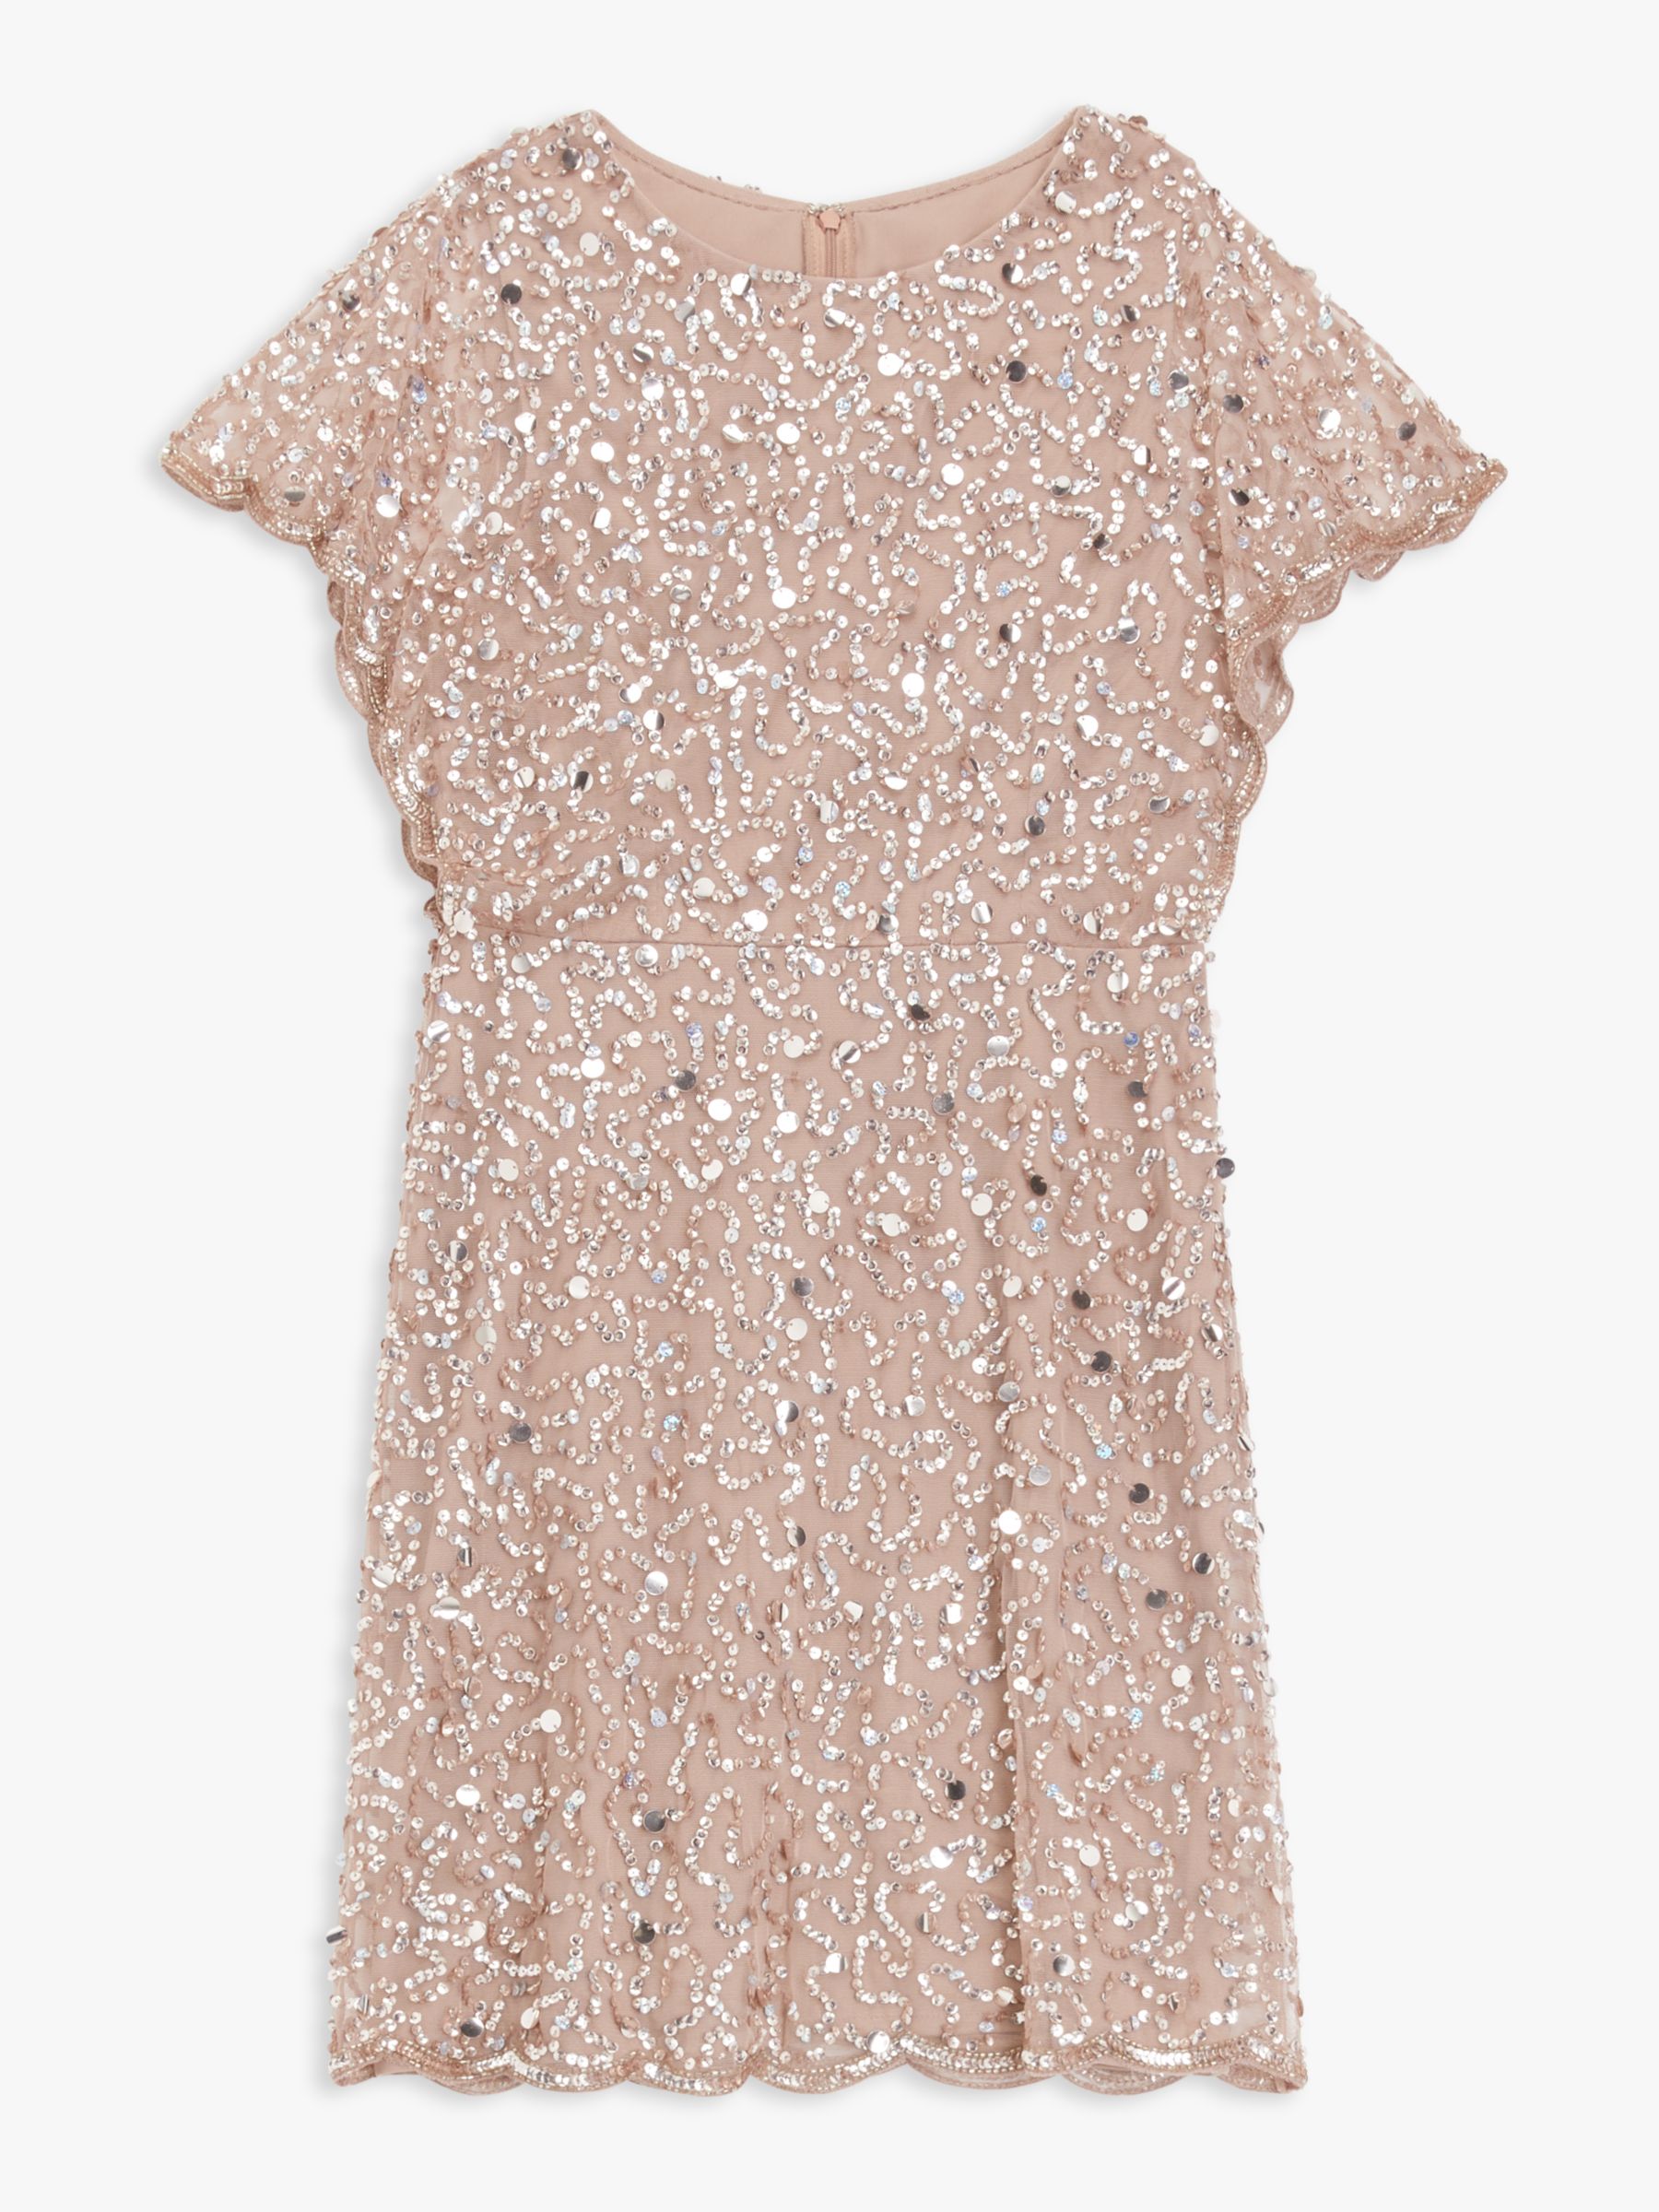 Lace & Beads Rafaella Embellished Mini Dress, Rose Gold, 8